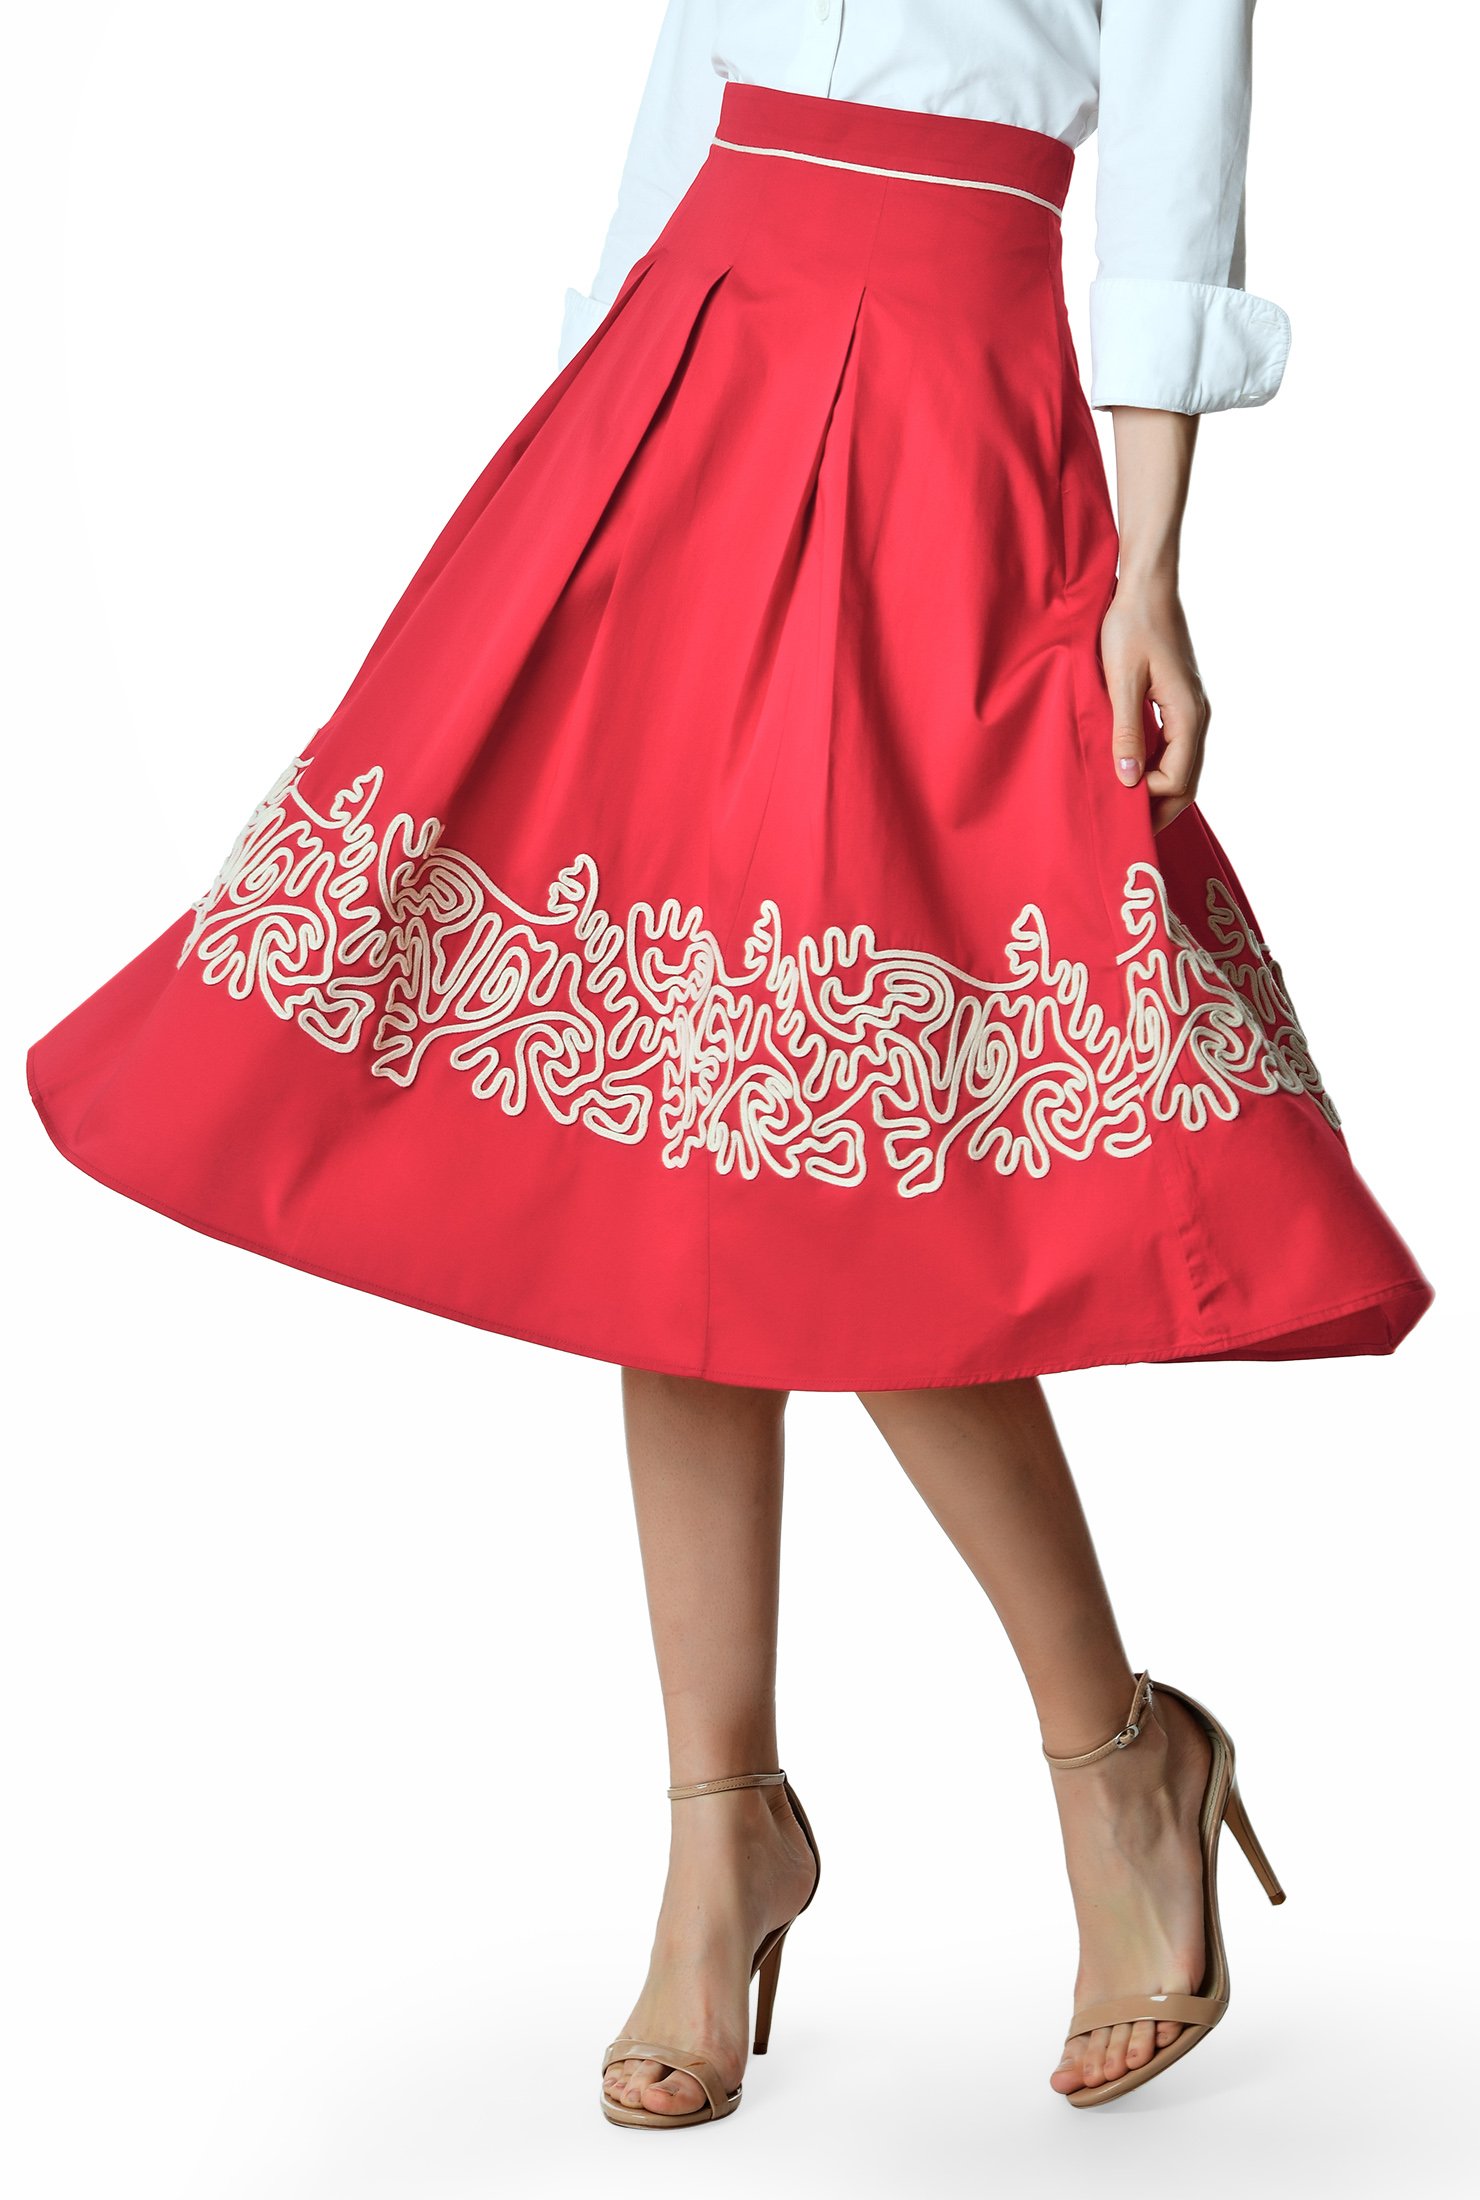 Shop Cord embroidery cotton satin full skirt | eShakti